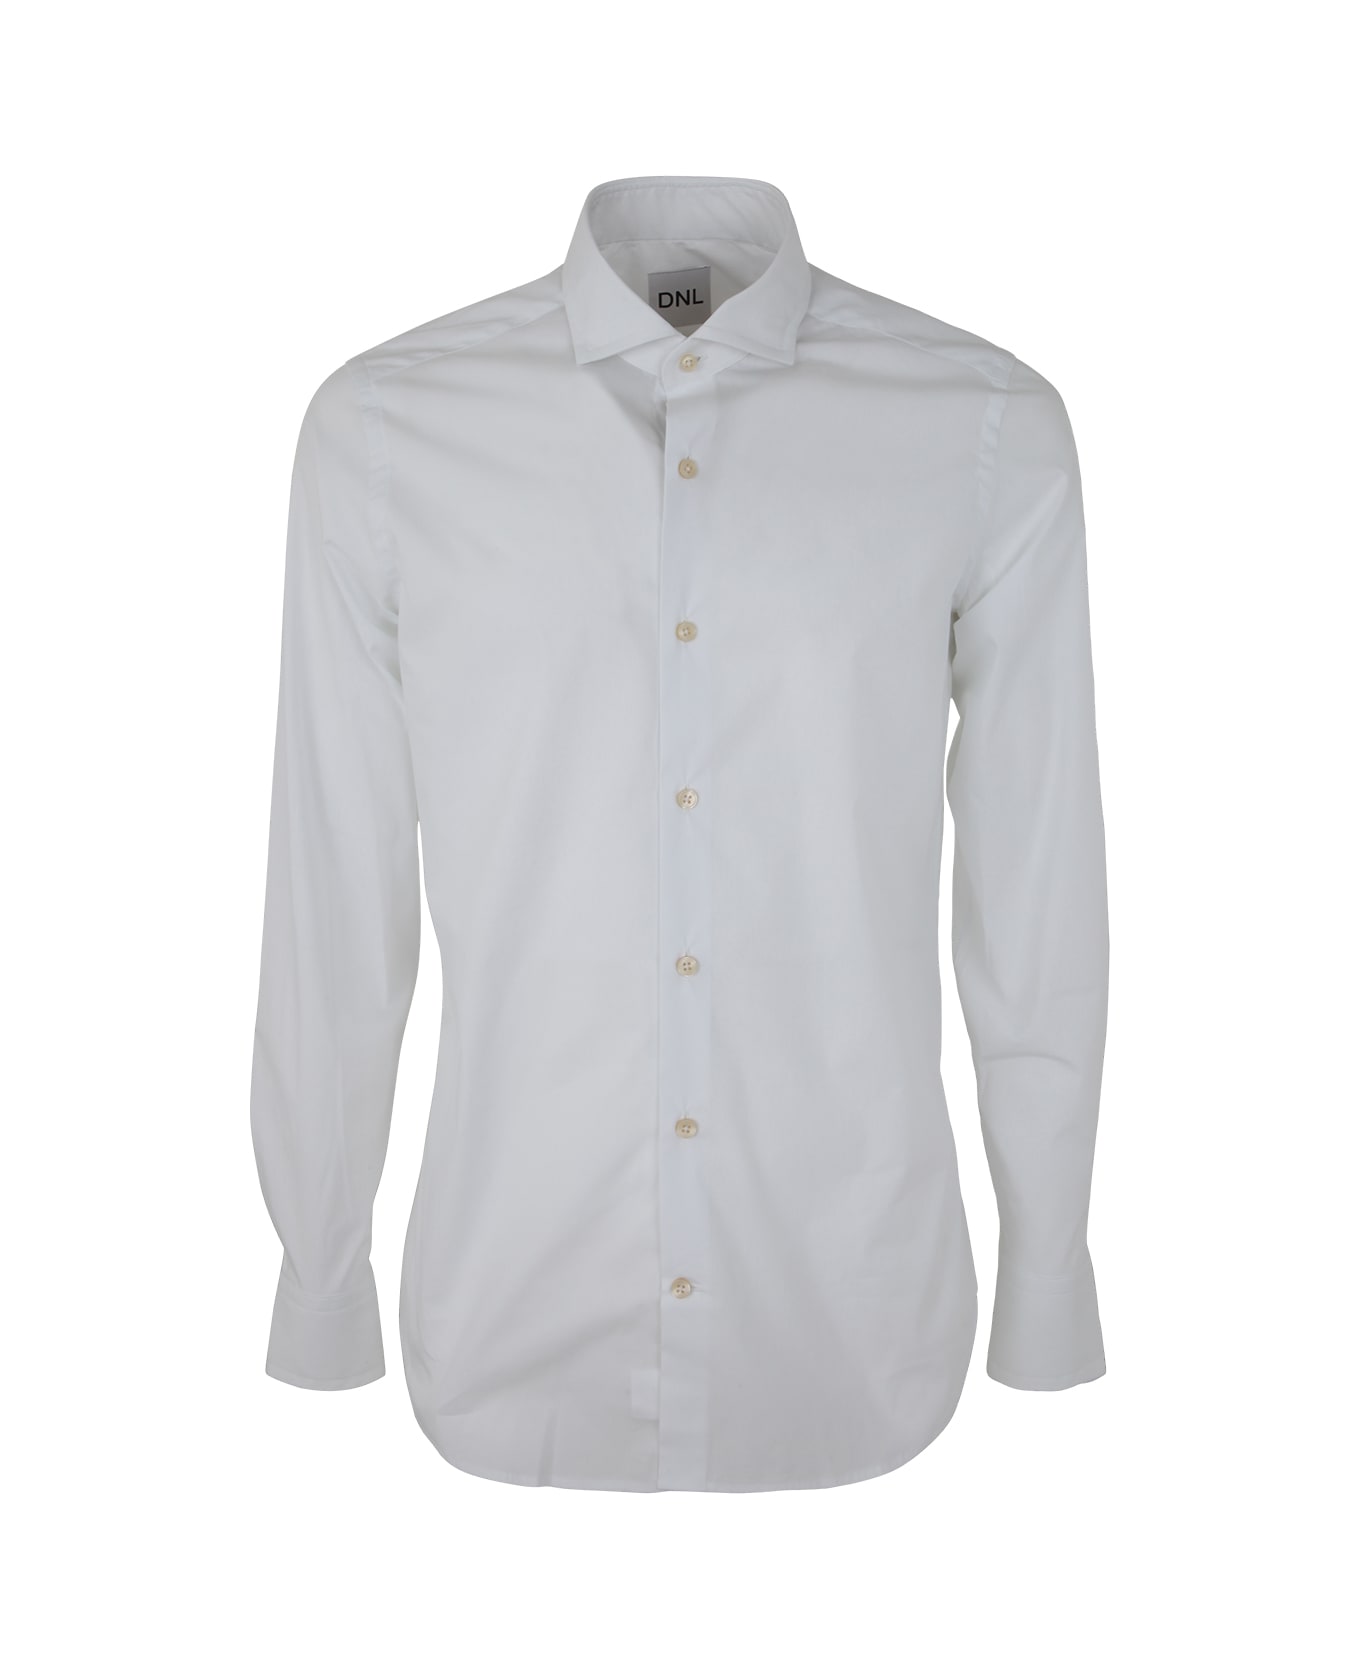 DNL Slim Shirt - White シャツ